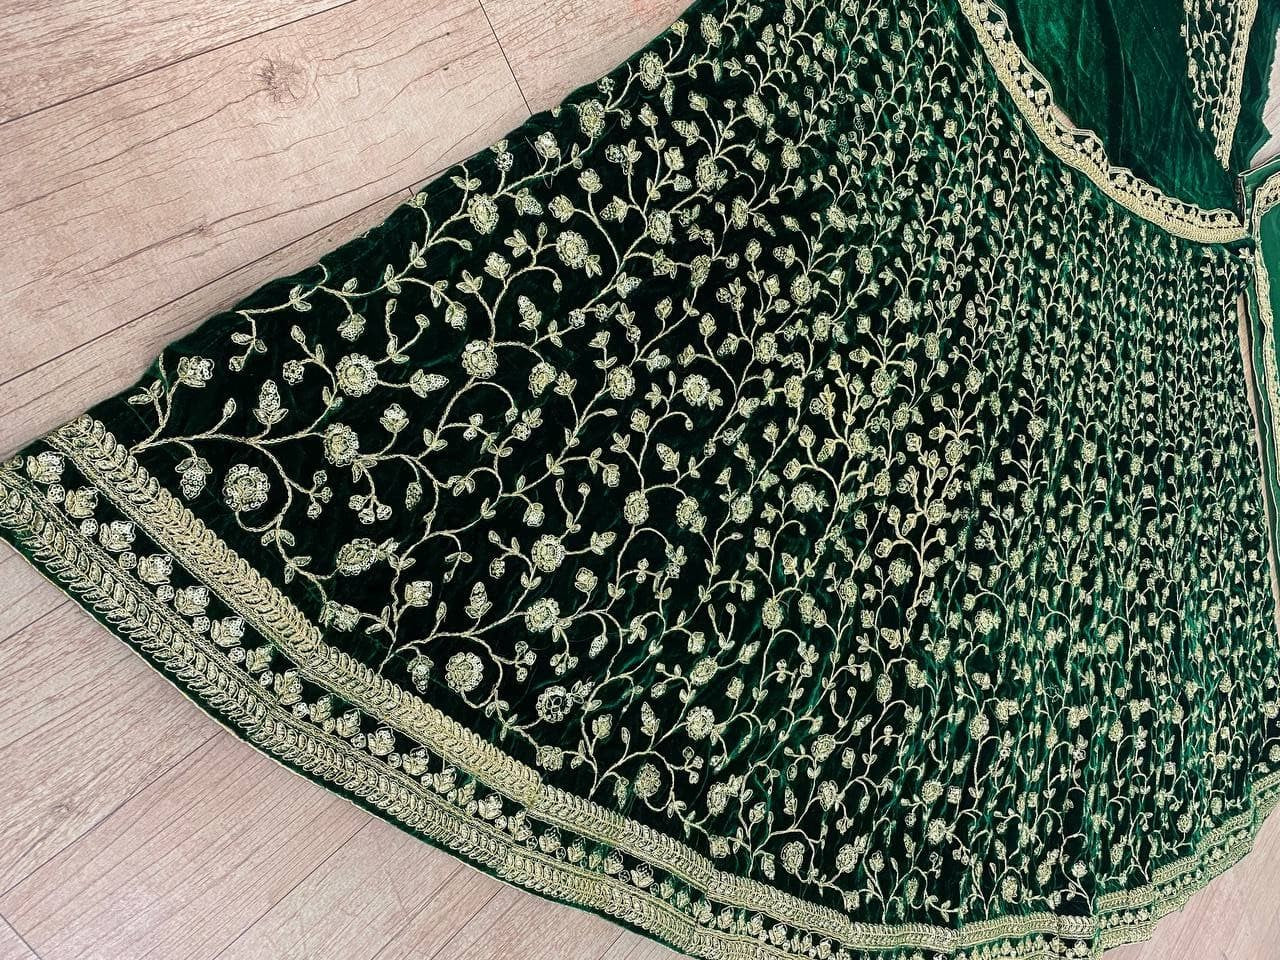 Green Lehenga Choli In Velvet With Embroidery Work